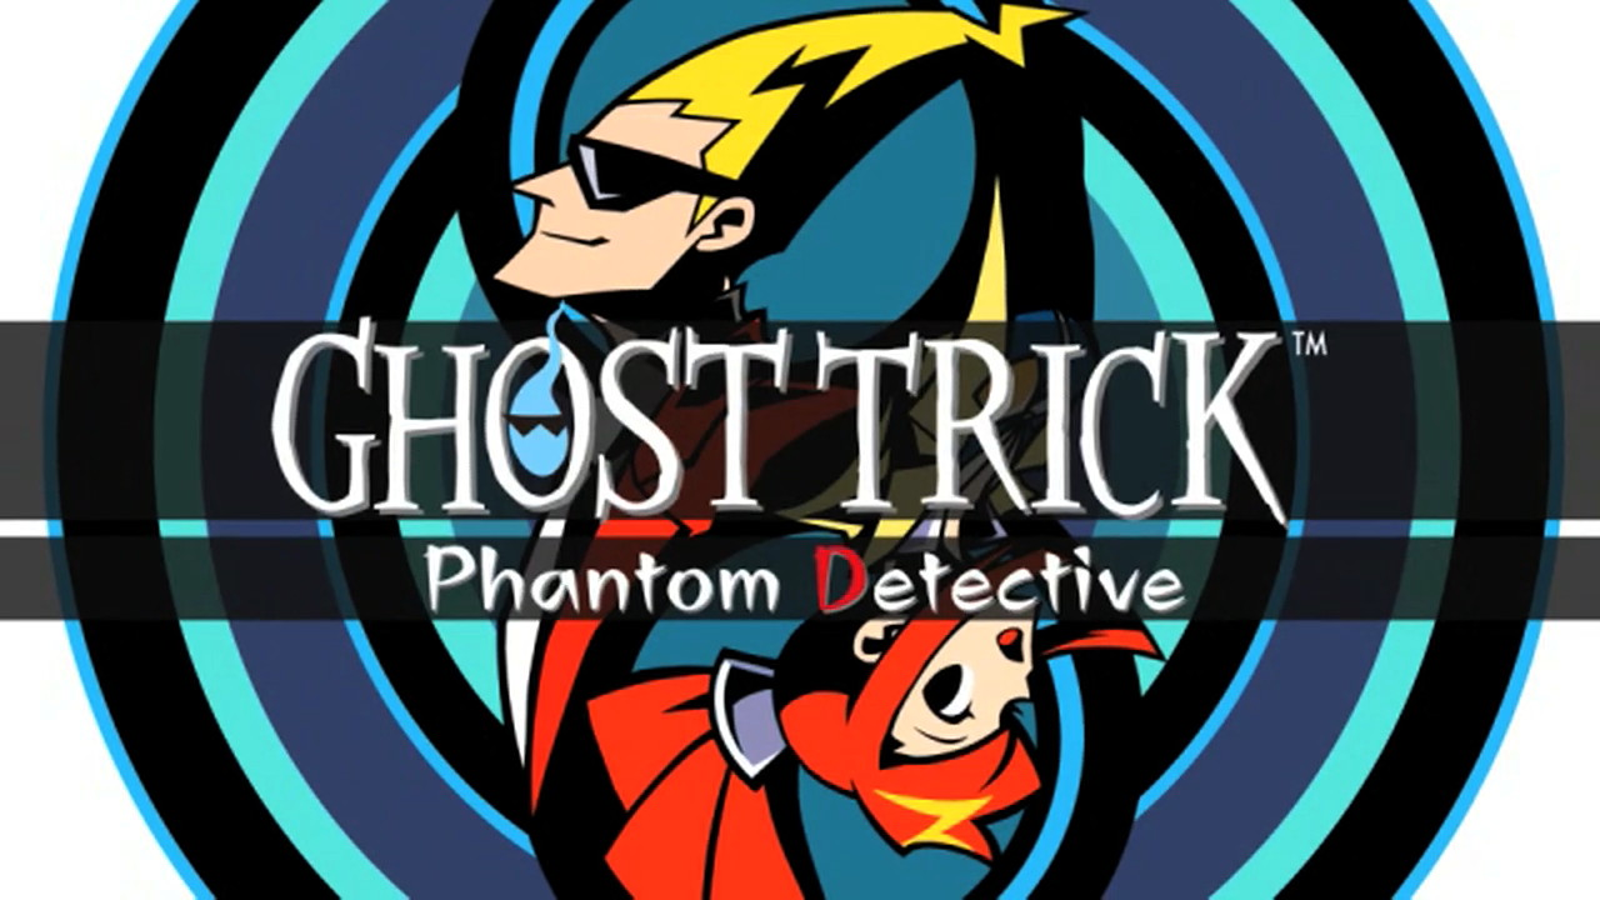 capcom ghost trick download free